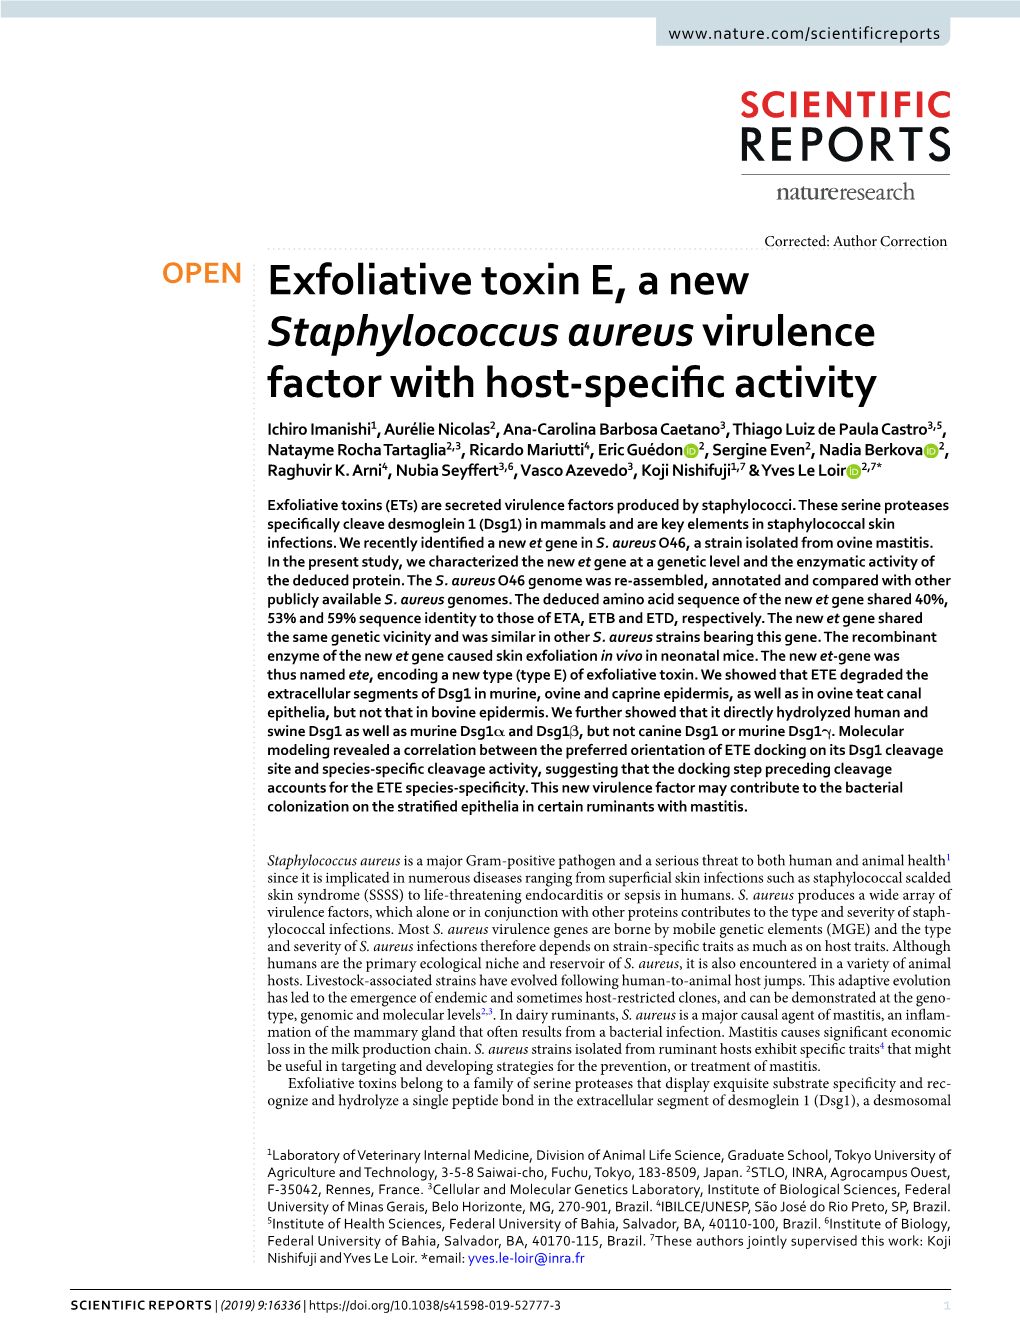 Exfoliative Toxin E, a New Staphylococcus Aureus